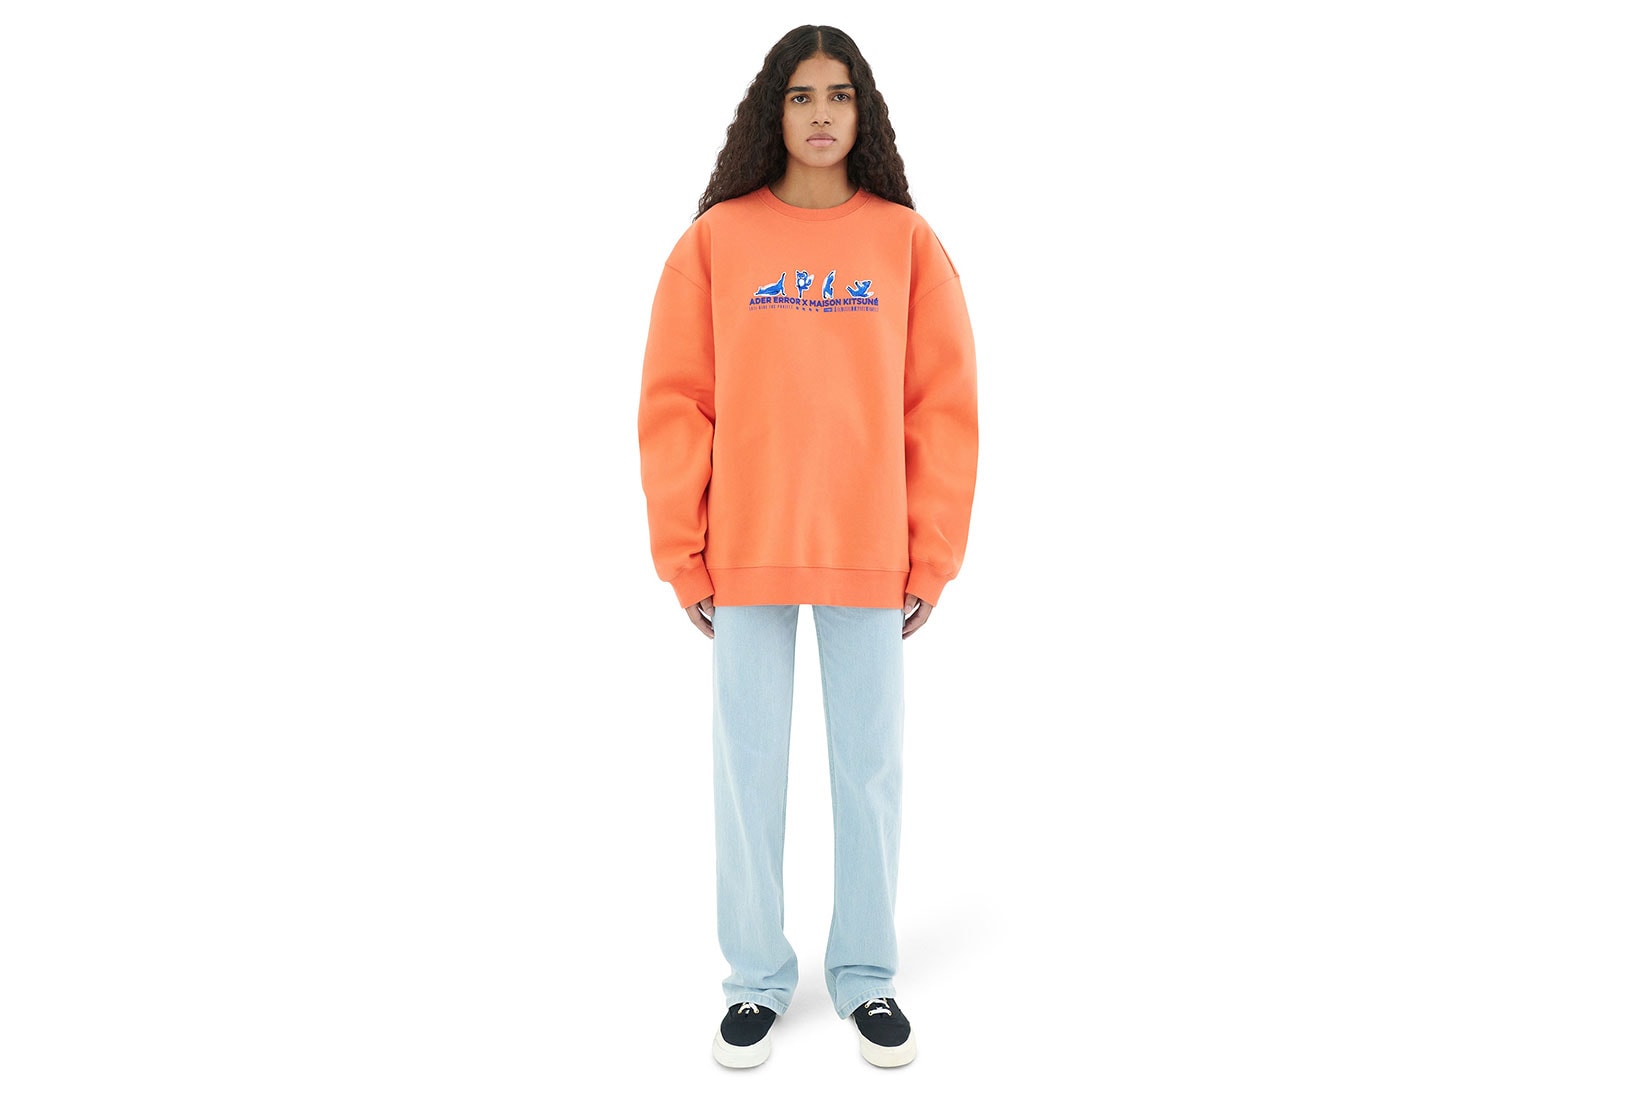 ADERERROR Maison Kitsune The Bluest Fox Collaboration Coral Orange Sweatshirt